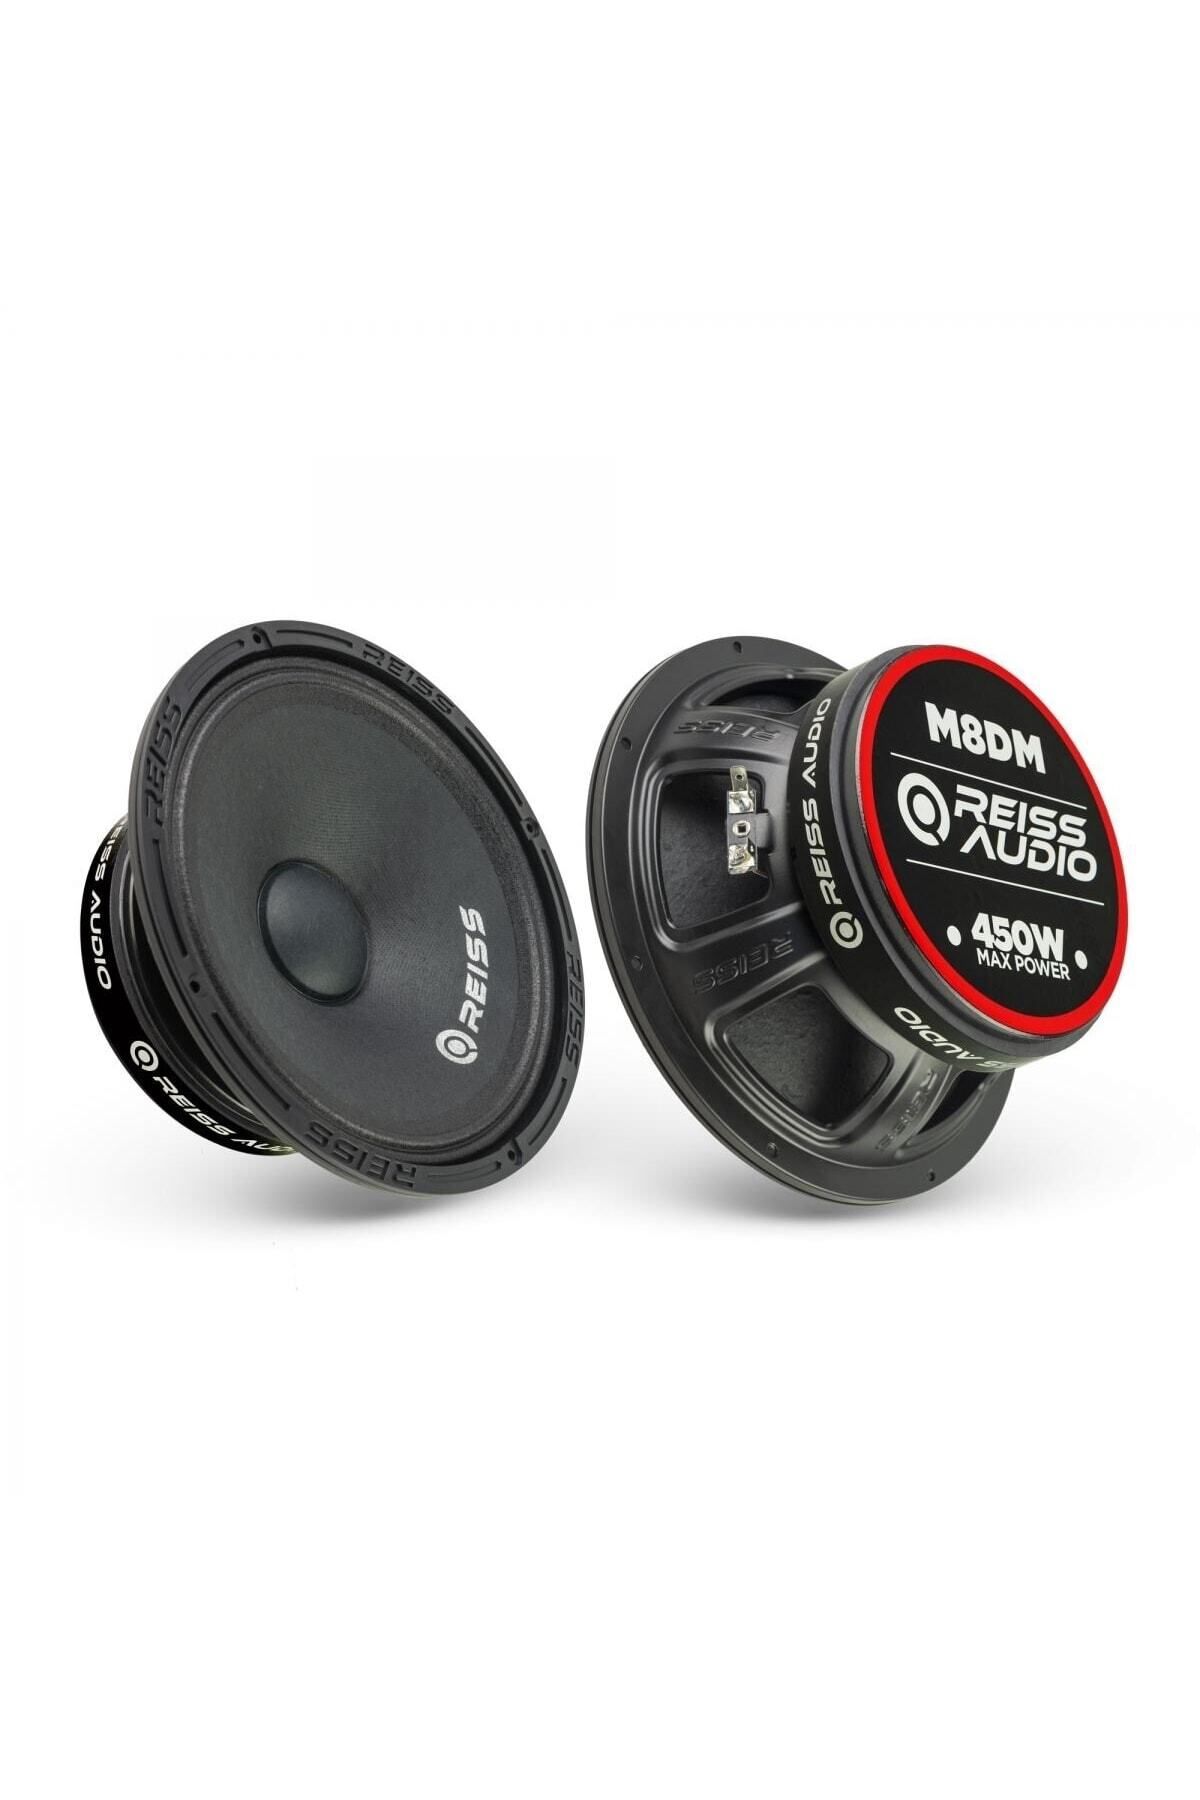 Soundmax Reis Audio Rs-m8dm 20cm Midrange Hoparlör Takımı